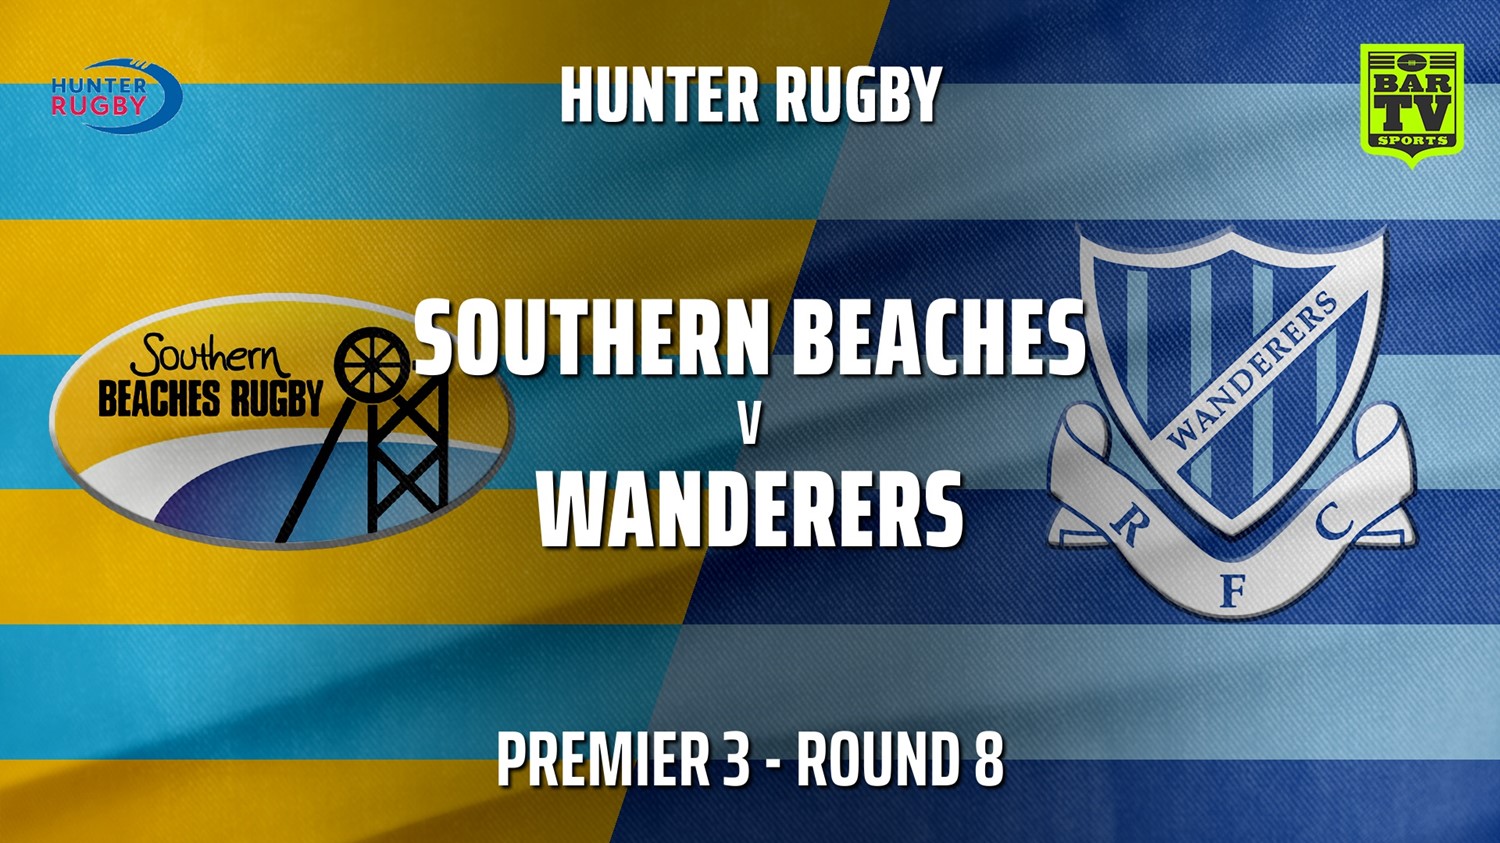 210605-HRU Round 8 - Premier 3 - Southern Beaches v Wanderers Slate Image